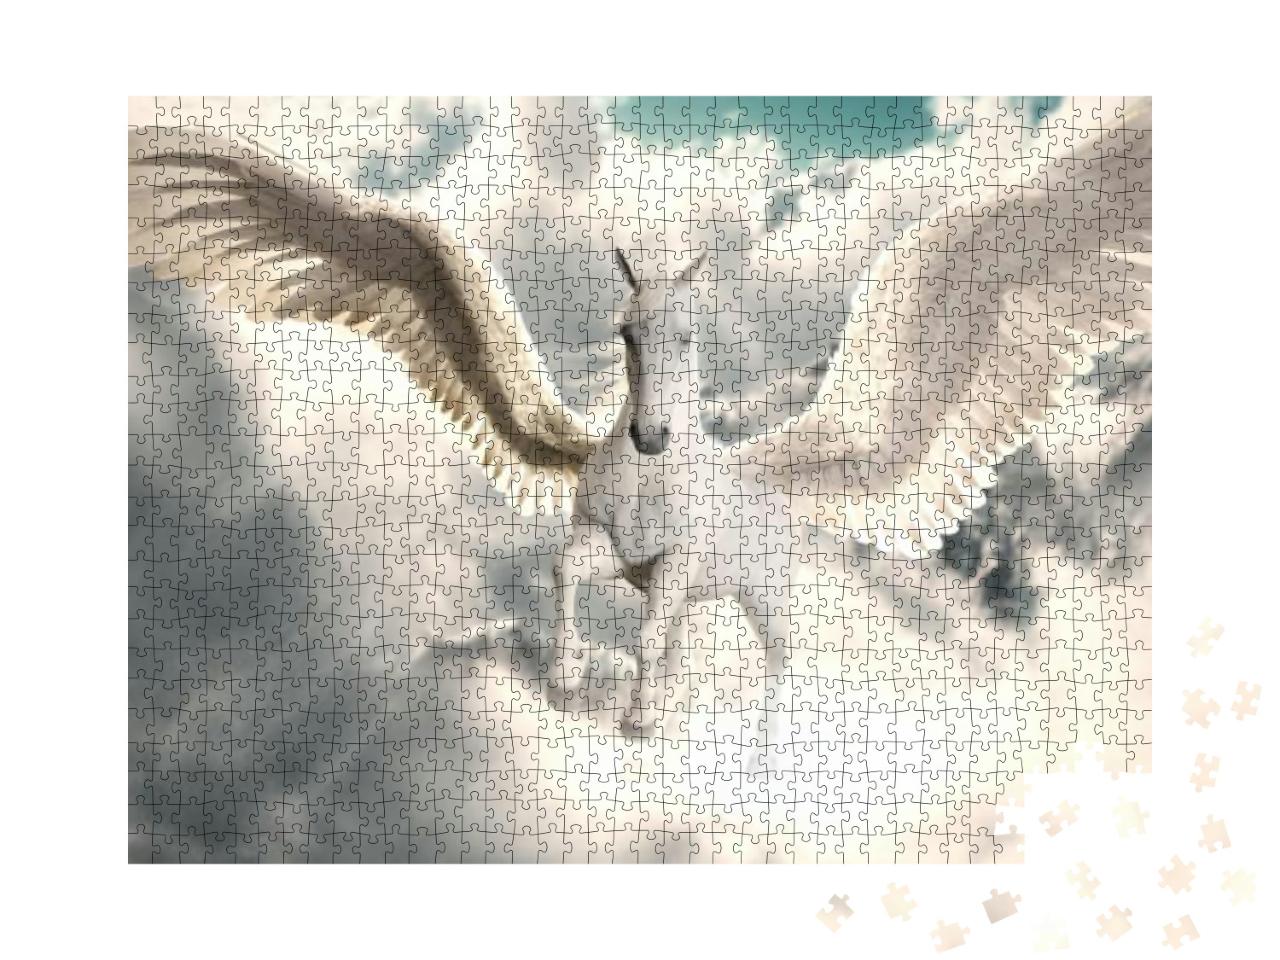 Puzzle 1000 Teile „Digitale Kunst: Majestätischer Flug des Pegasus über den Wolken“